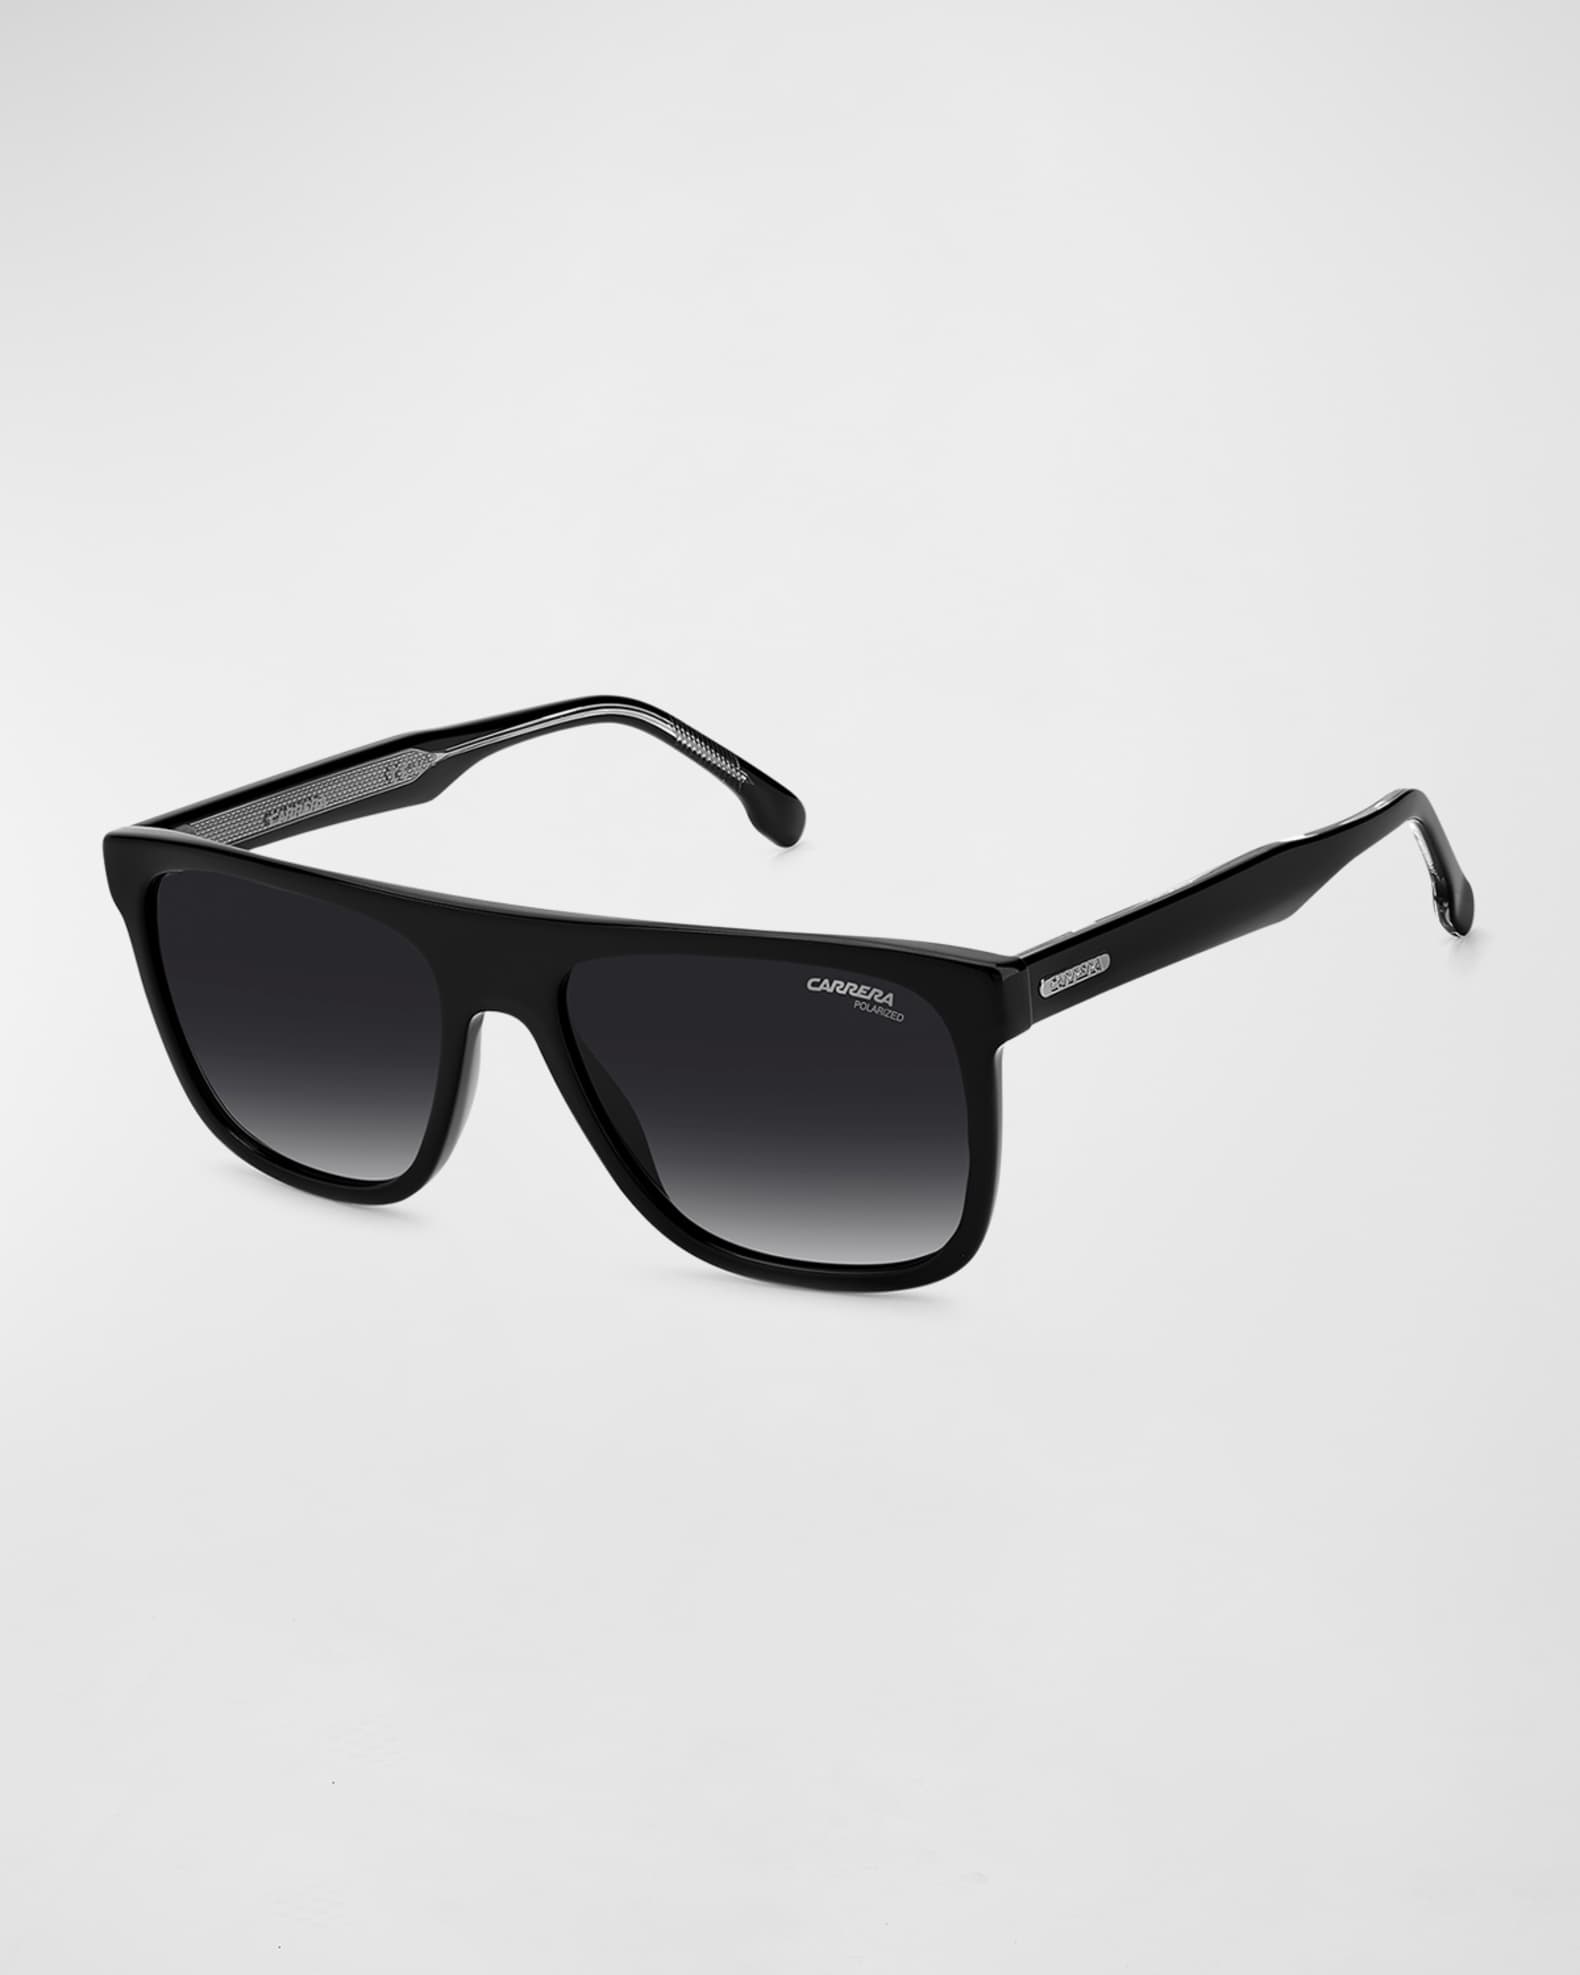 Carrera Polarized Men's Sunglasses Discount Price | www.og6666.com